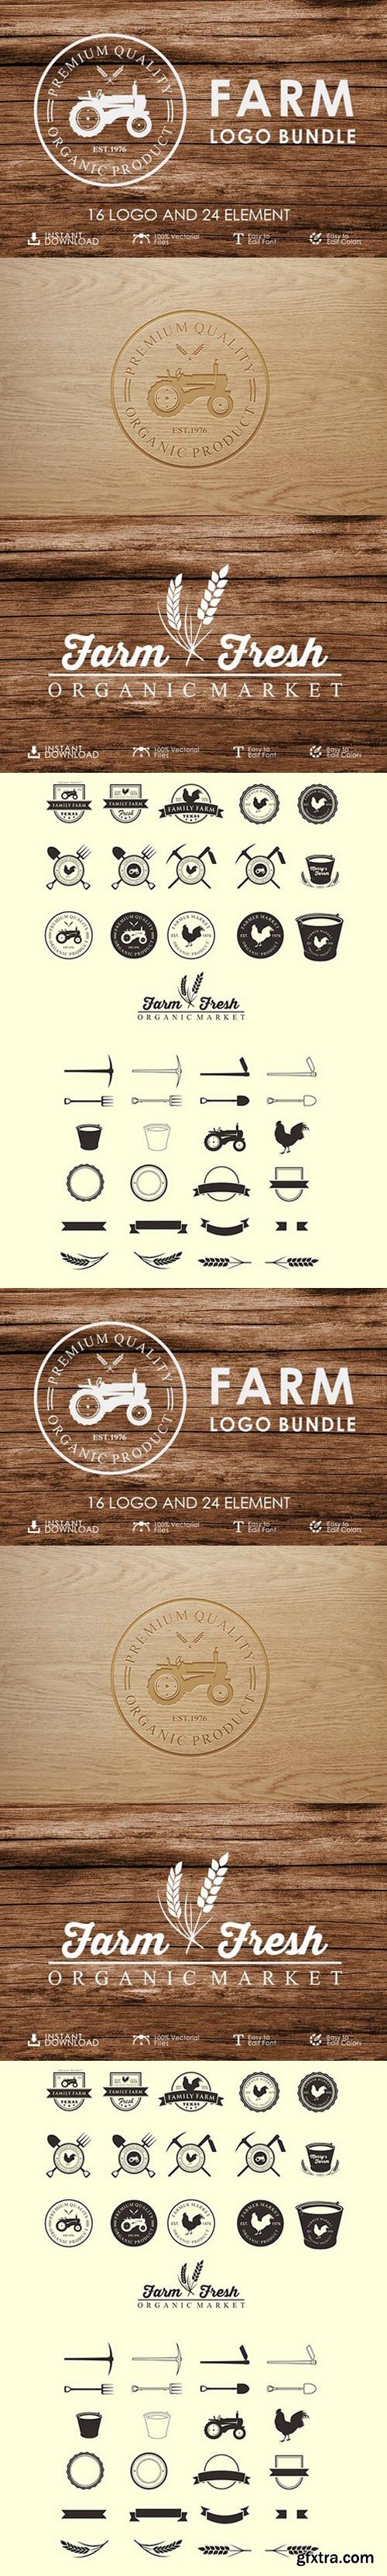 CM - Set of vintage farm logo 1505722